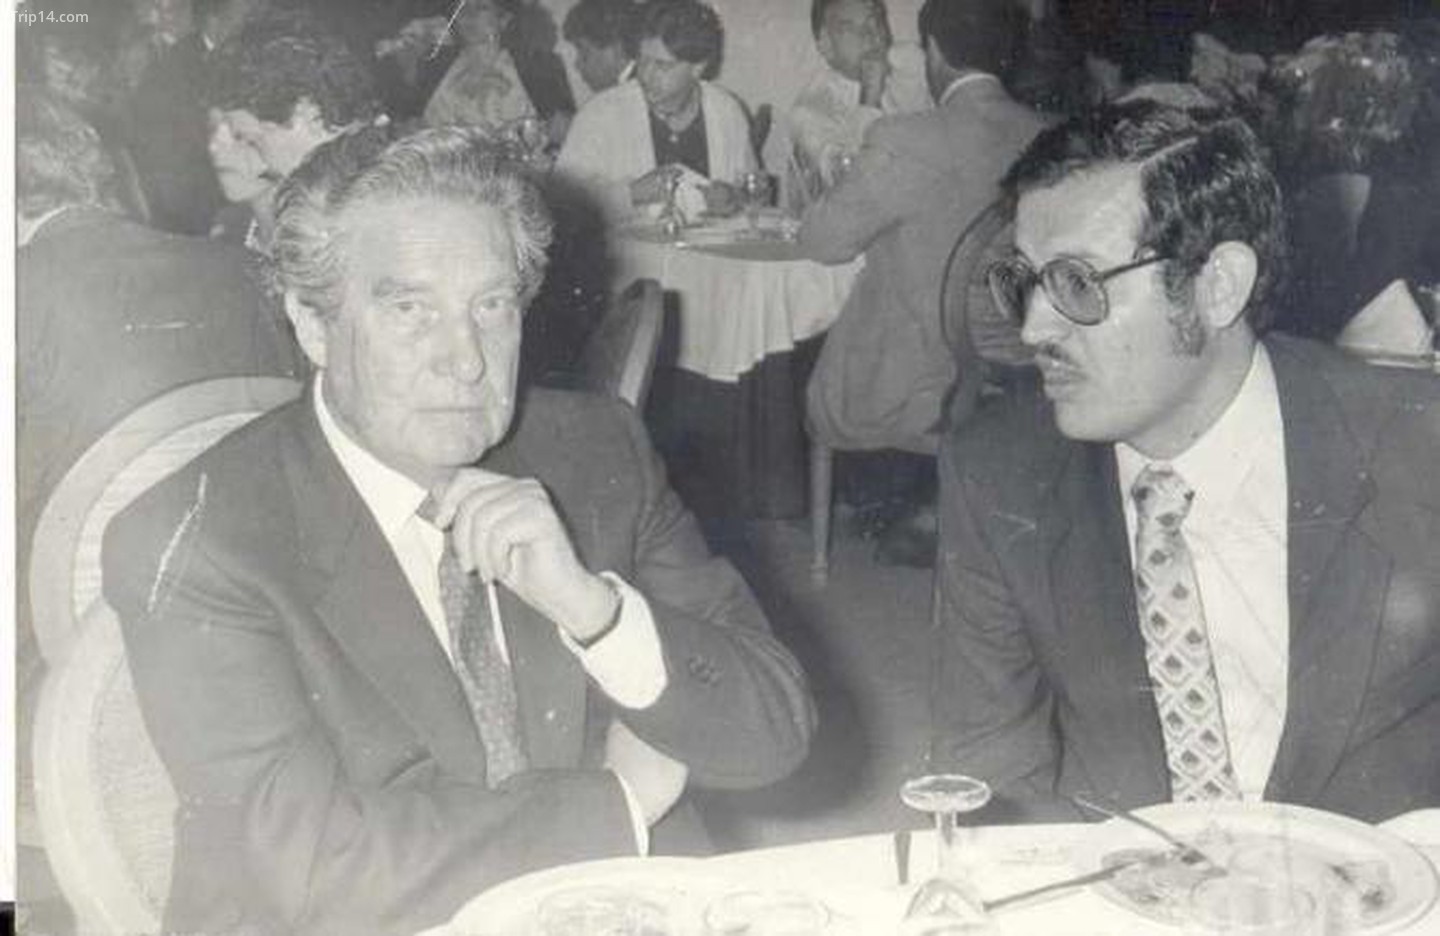  Octavio Paz với Heminio Martínez   |   